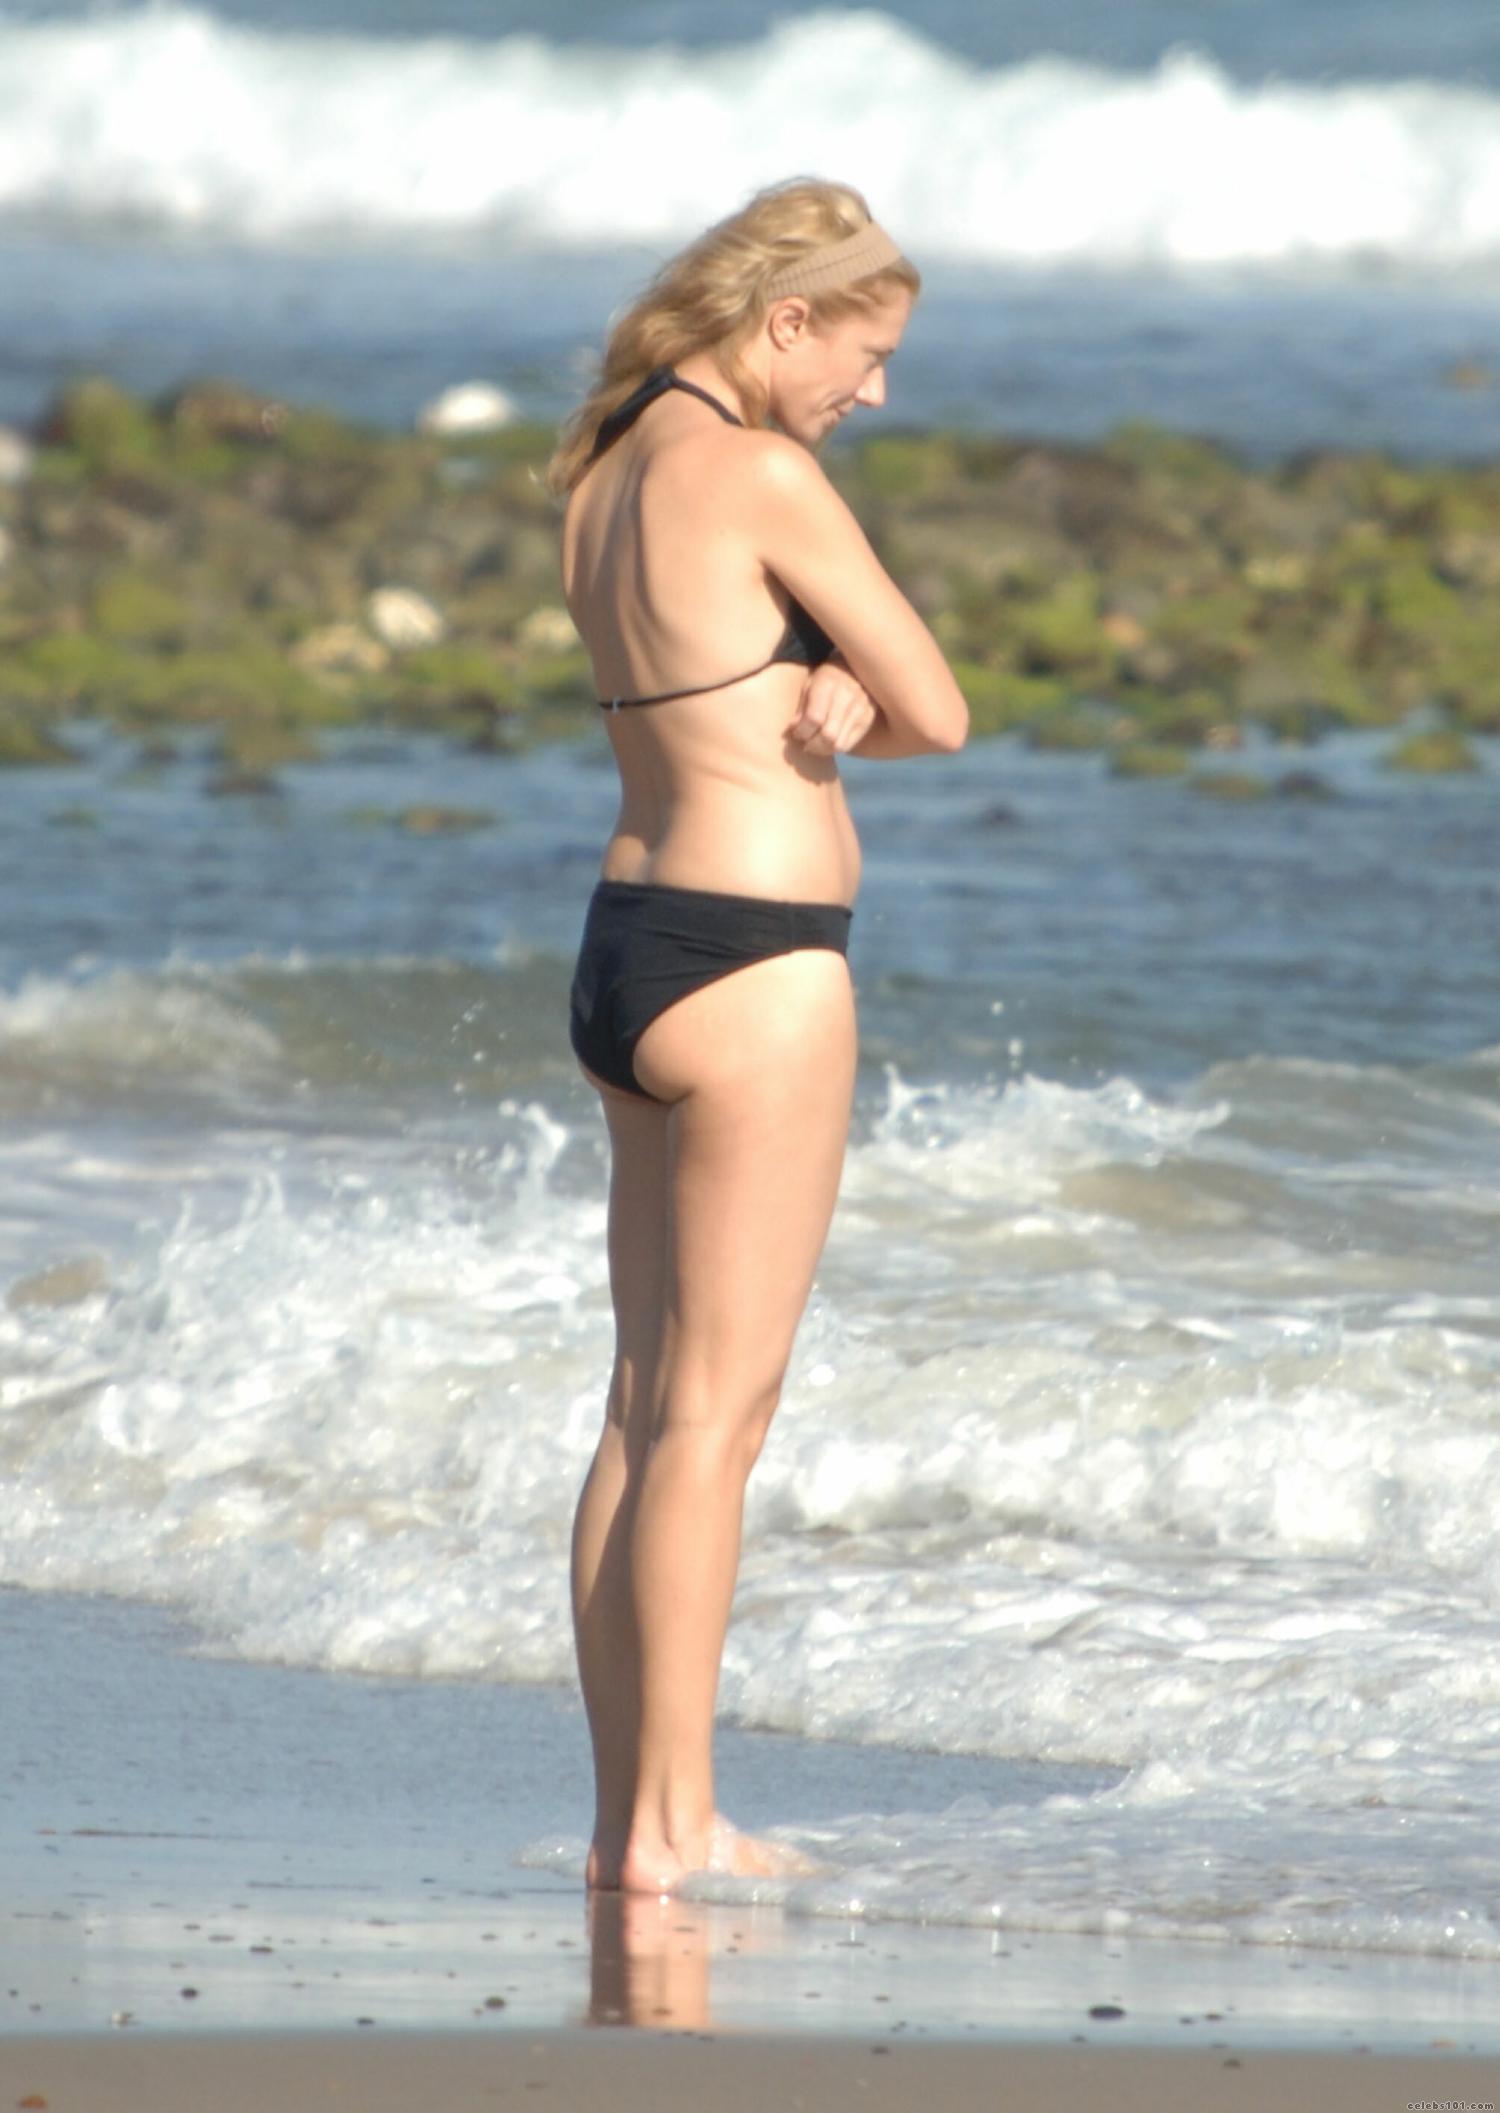 Joely richardson bikini